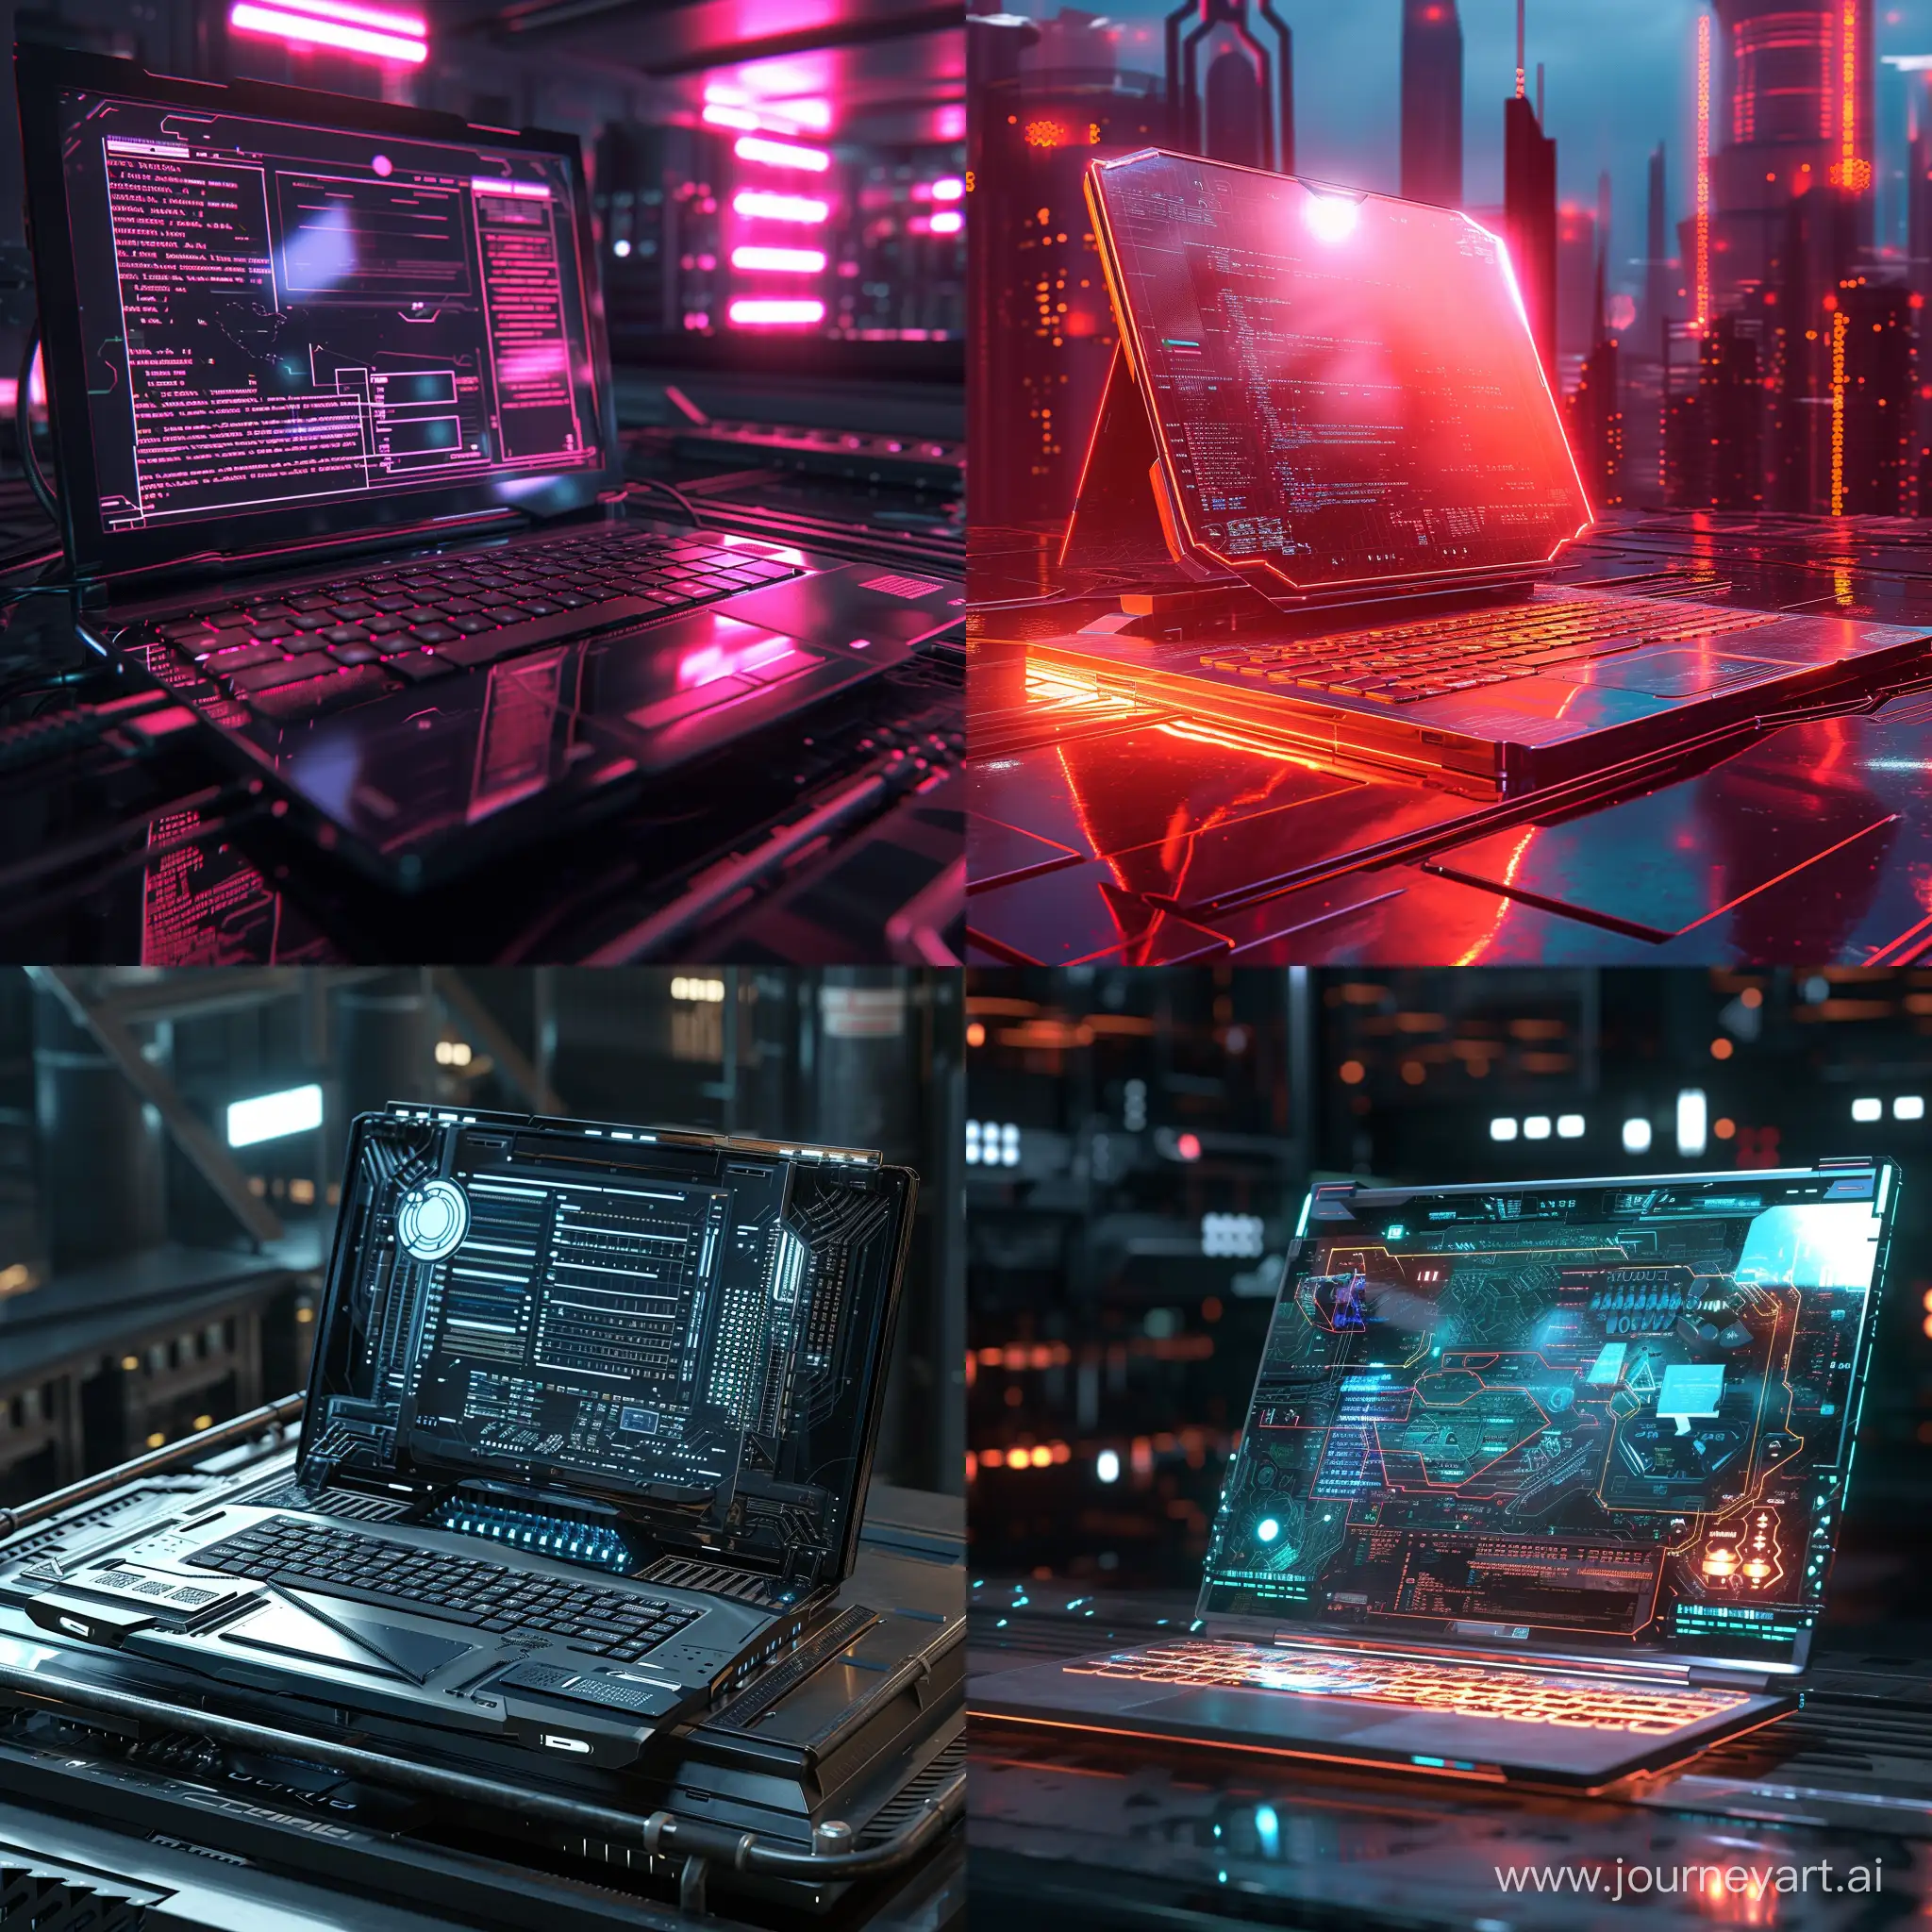 Futuristic-Dystopian-Postcyberpunk-Laptop-in-Cinematic-Style